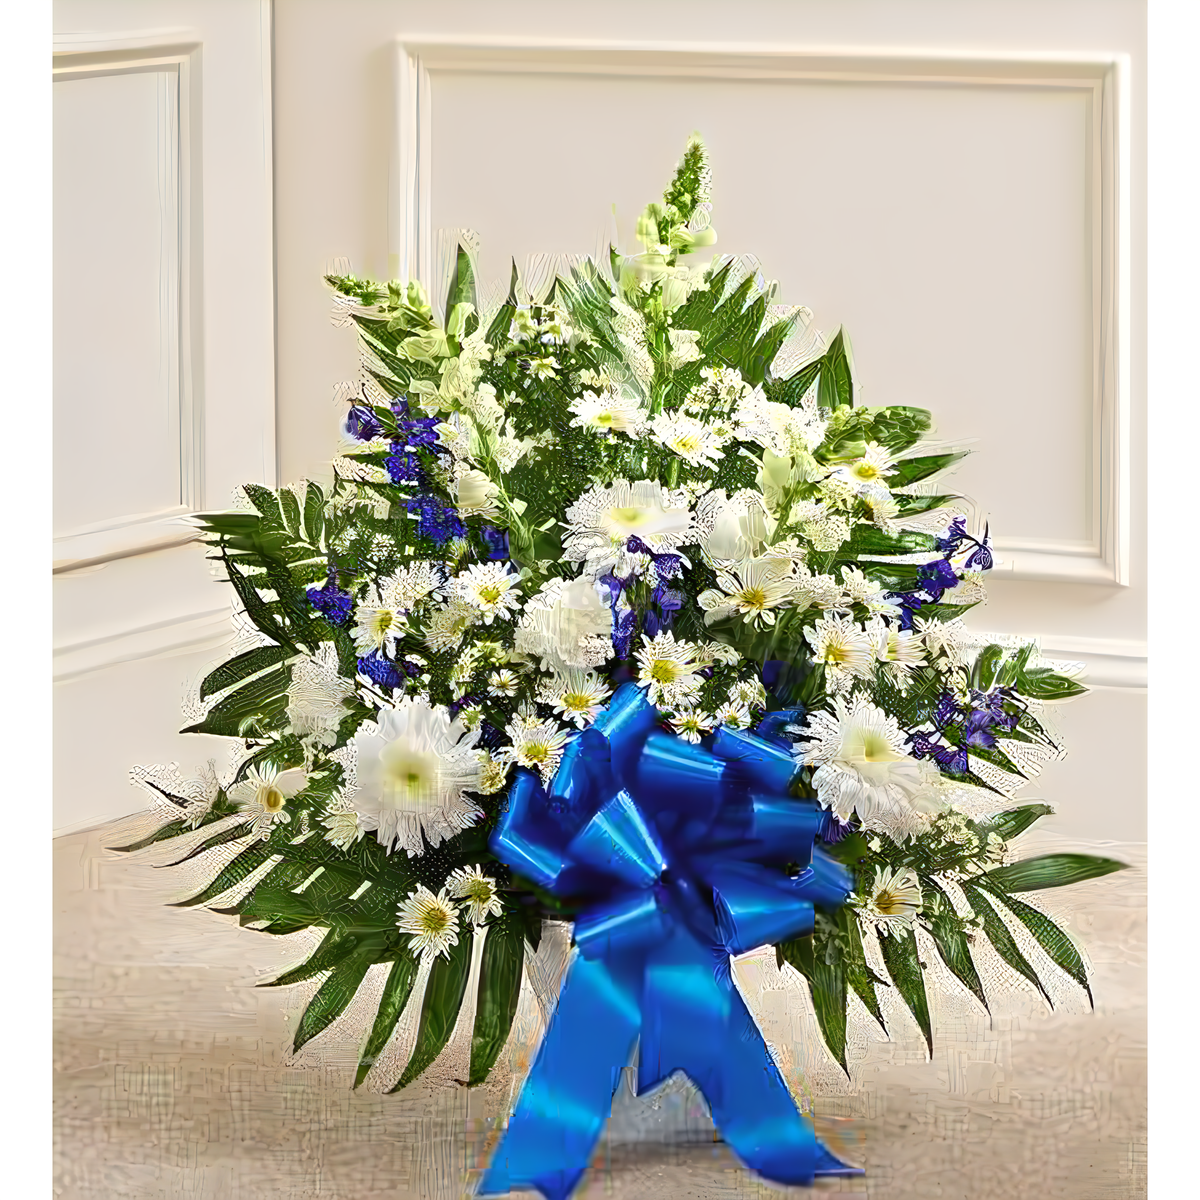 Manhattan Flower Delivery - Tribute Blue &amp; White Floor Basket Arrangement - Funeral &gt; For the Service